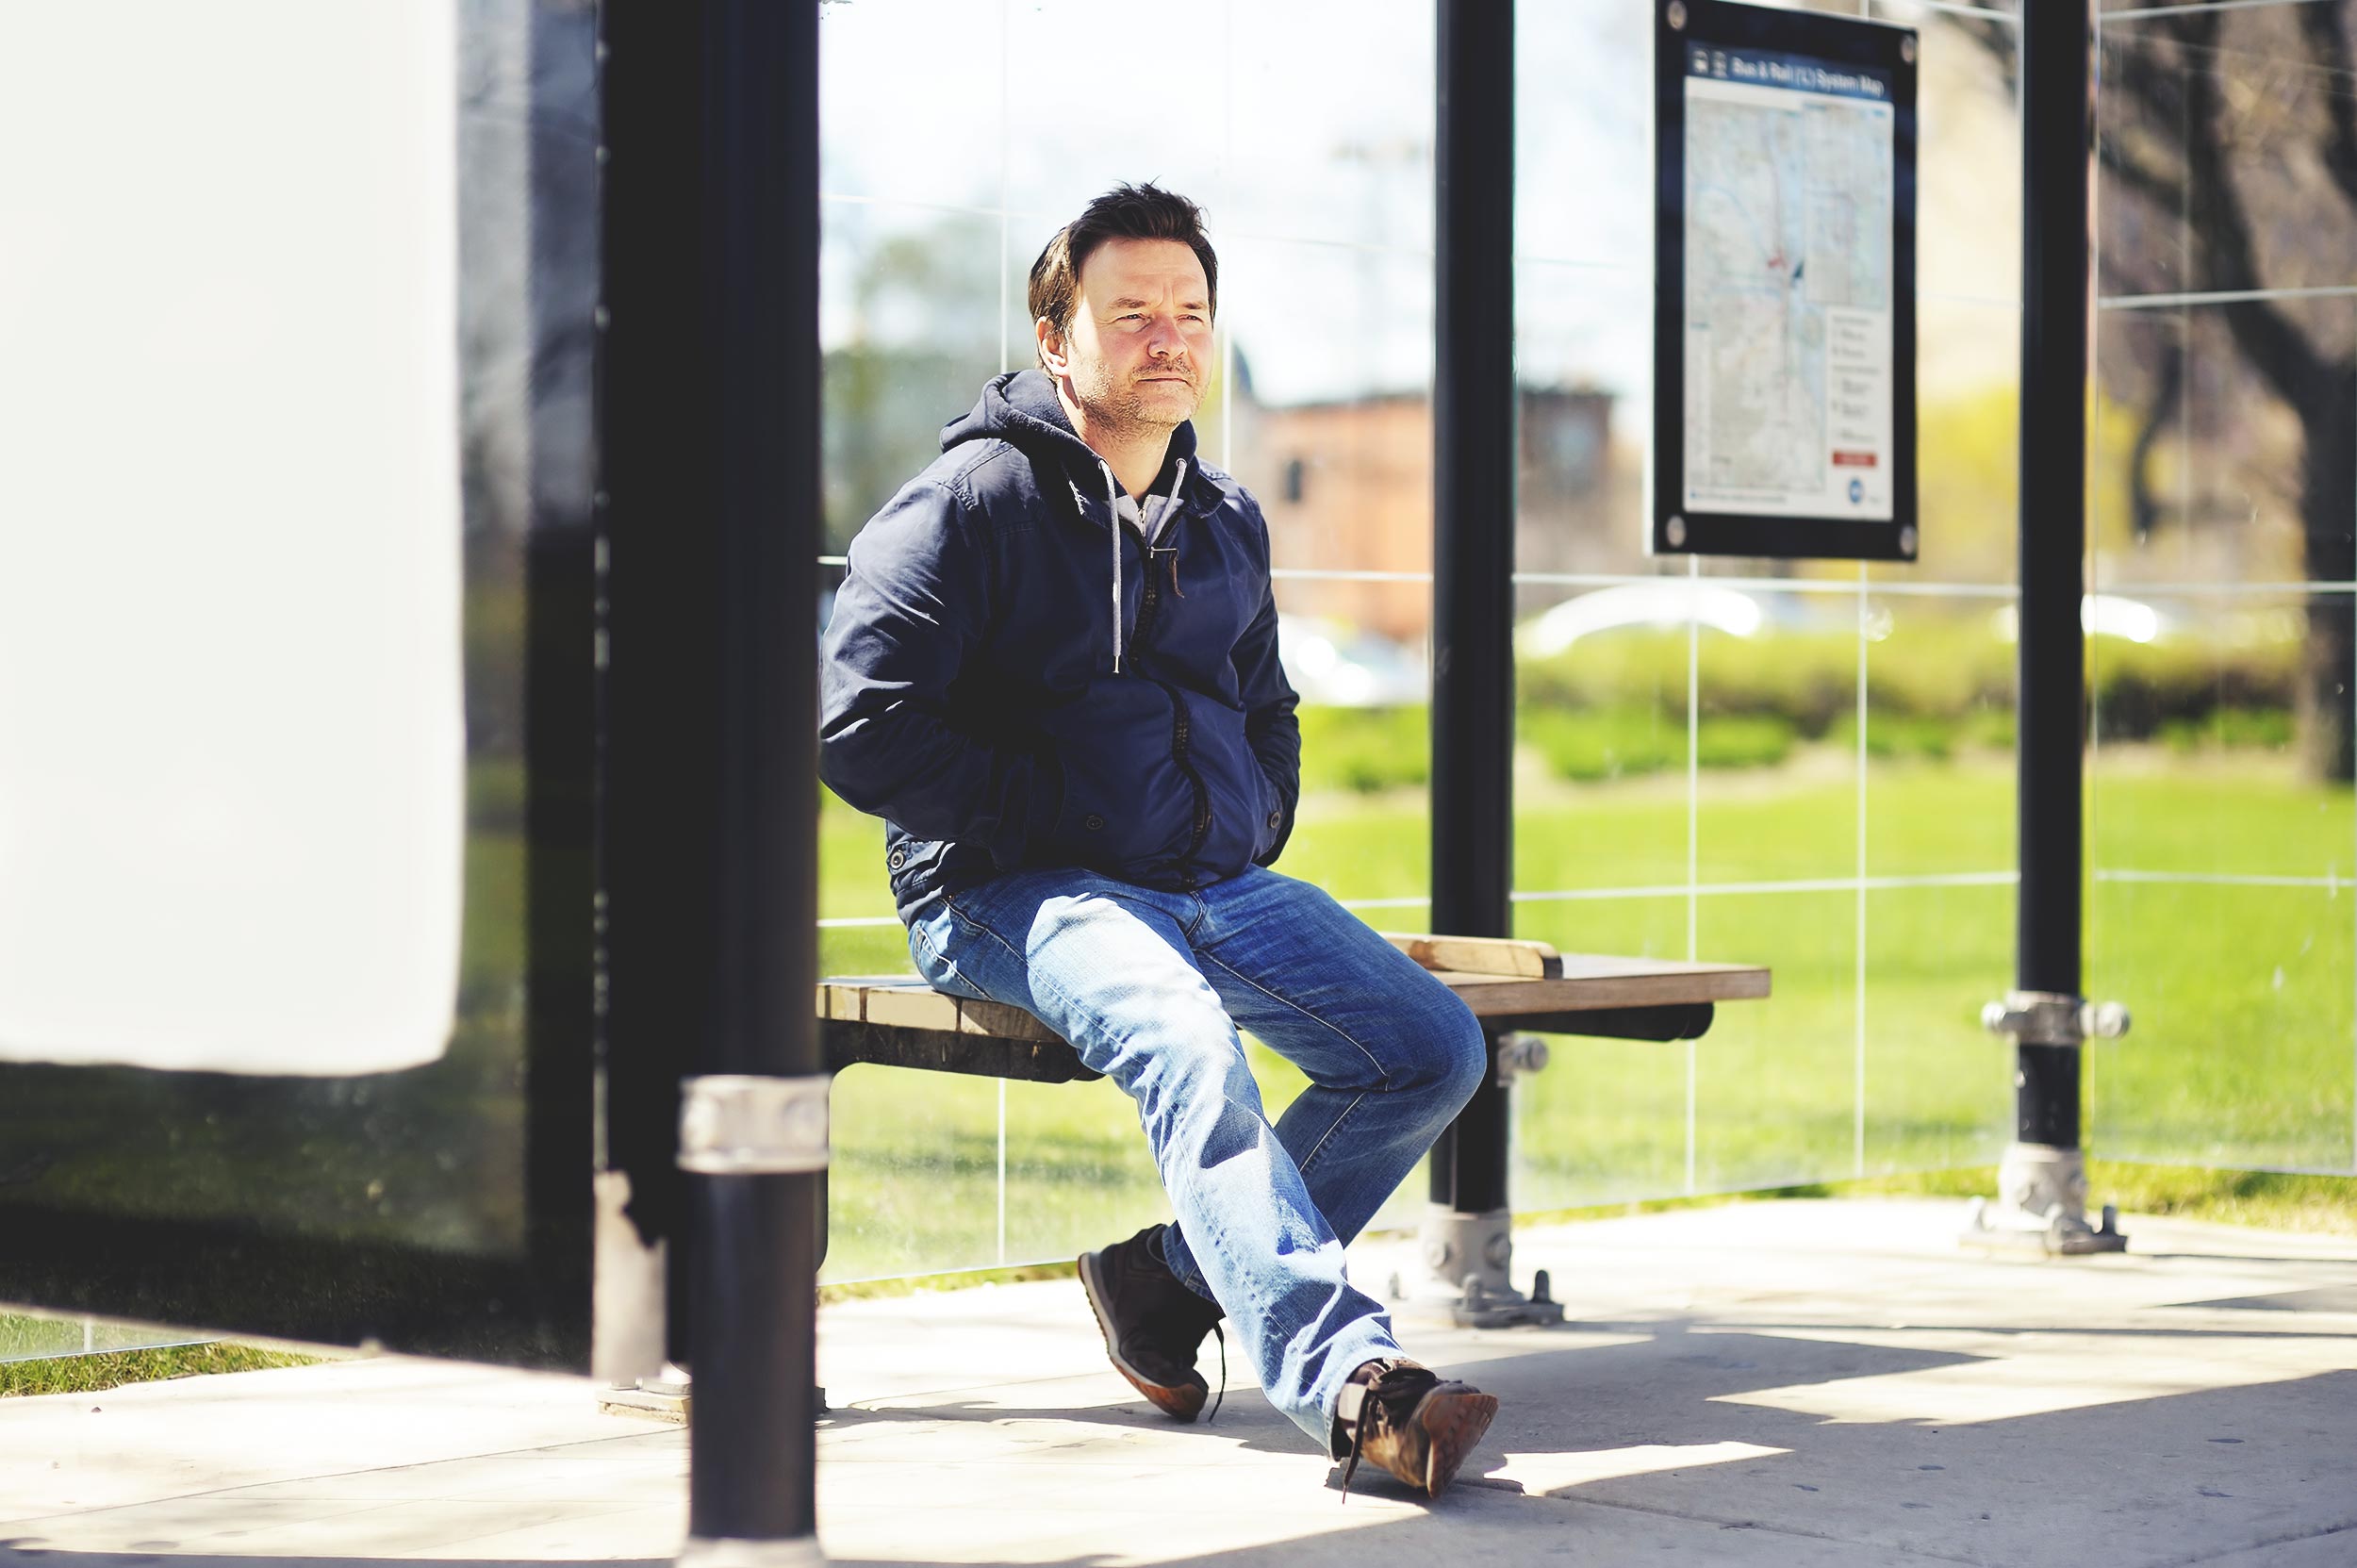 a man sitting at a bus stop awaiting a bus